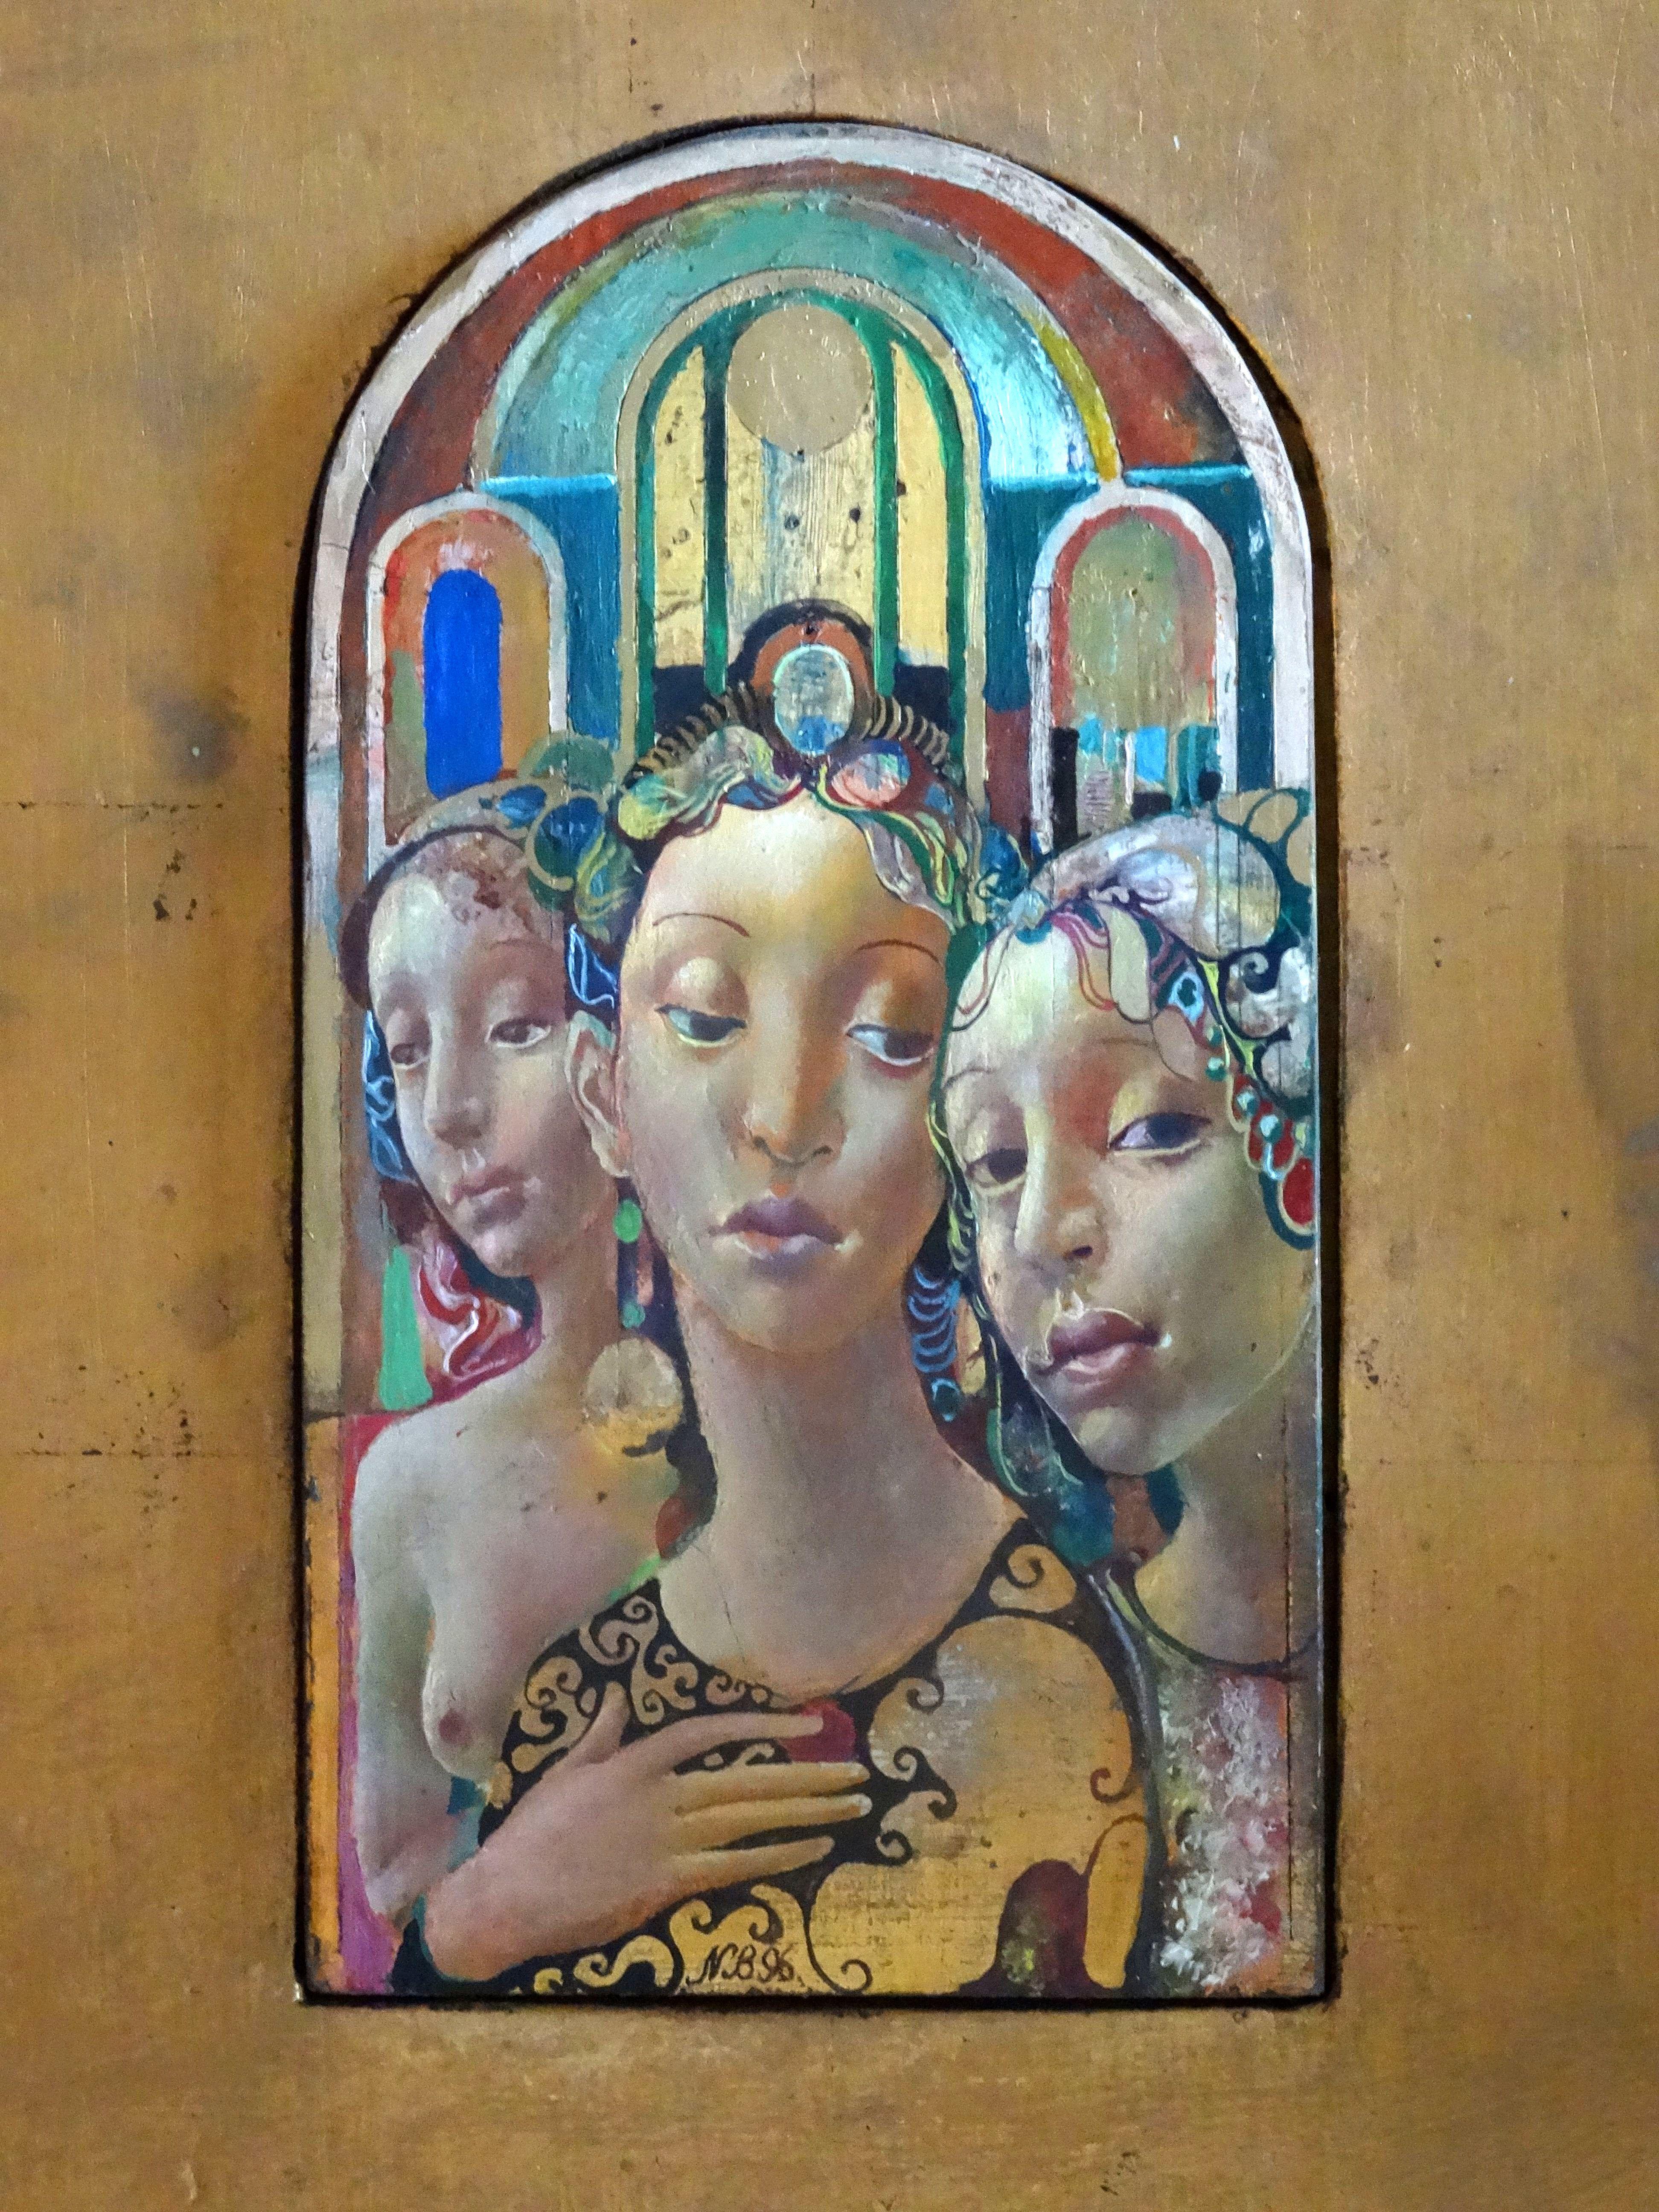 Normunds Braslinsh Figurative Painting - Three Graces. 1996, oil on wood, 32x23 cm